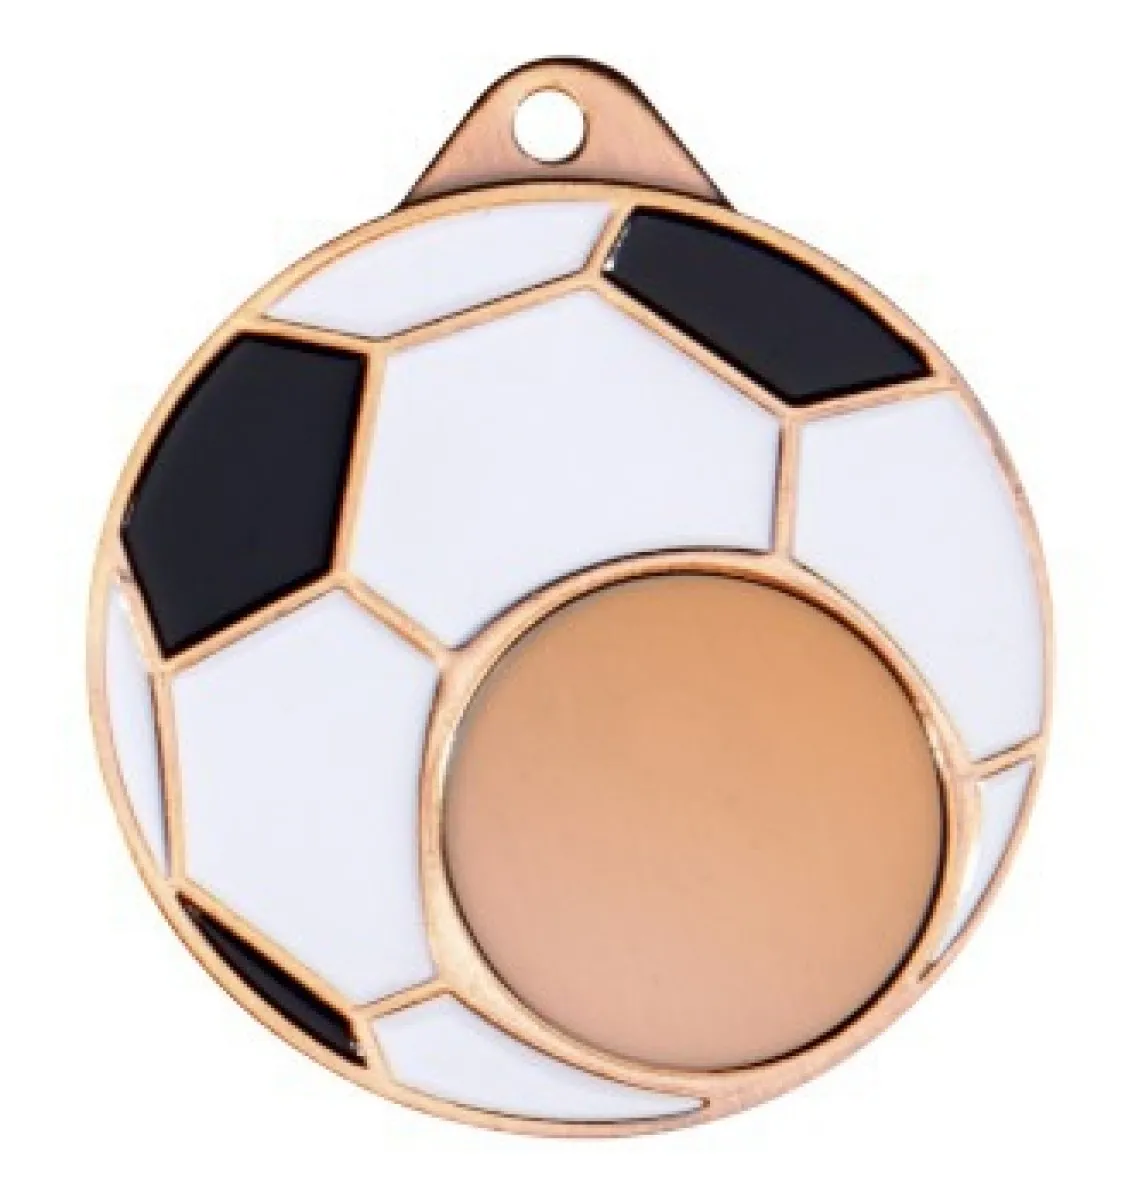 Medalla de fútbol, diámetro 50 mm